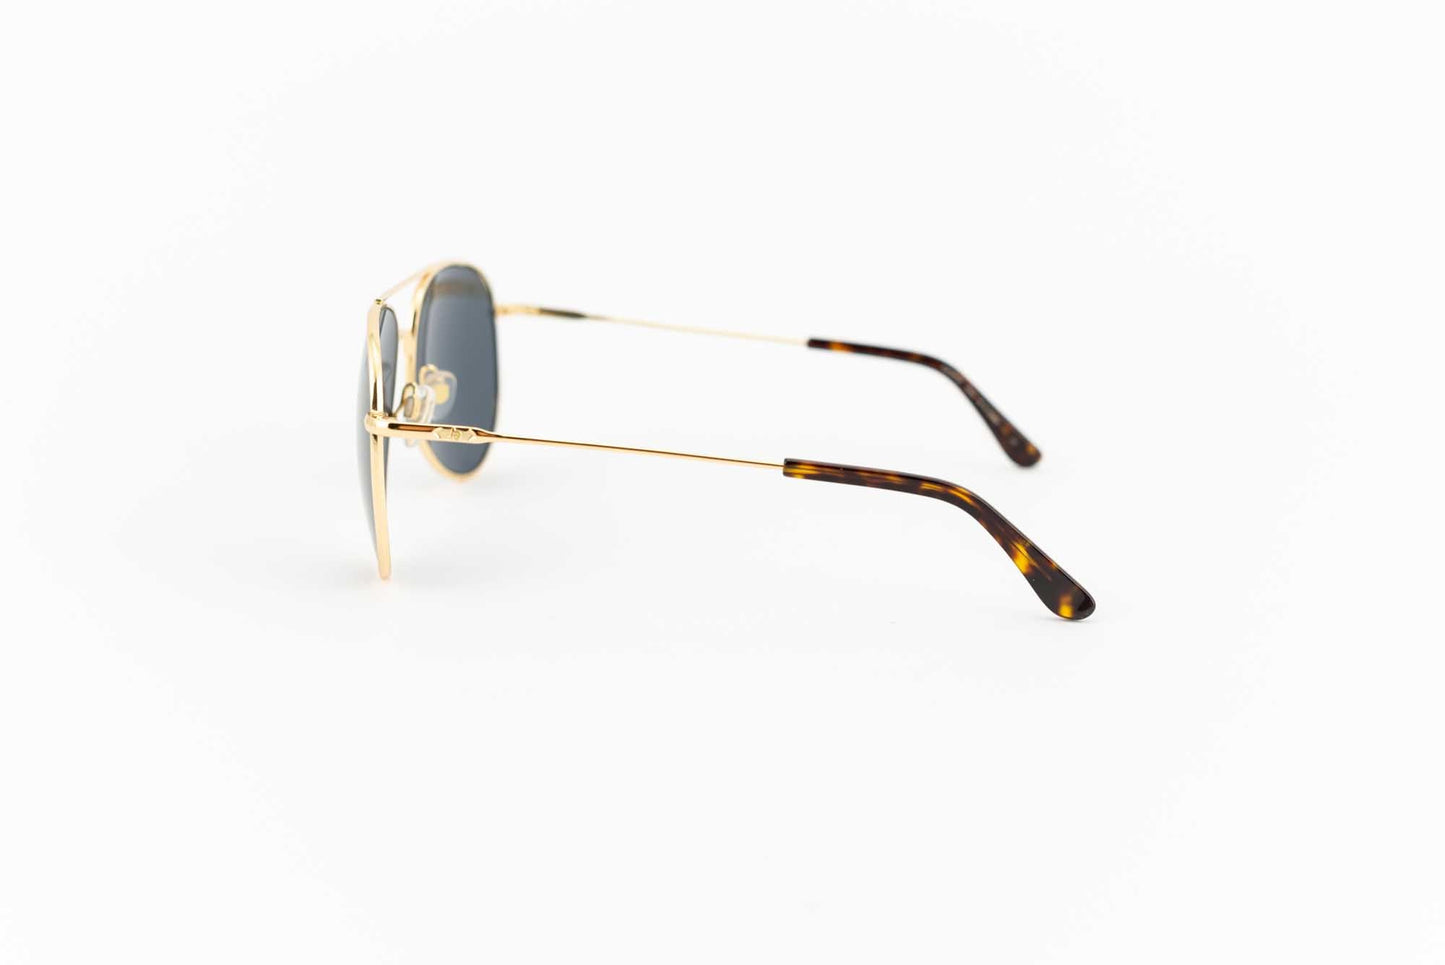 AO: General oro - Spectaclo.com - eyewear store - Occhiali da sole -